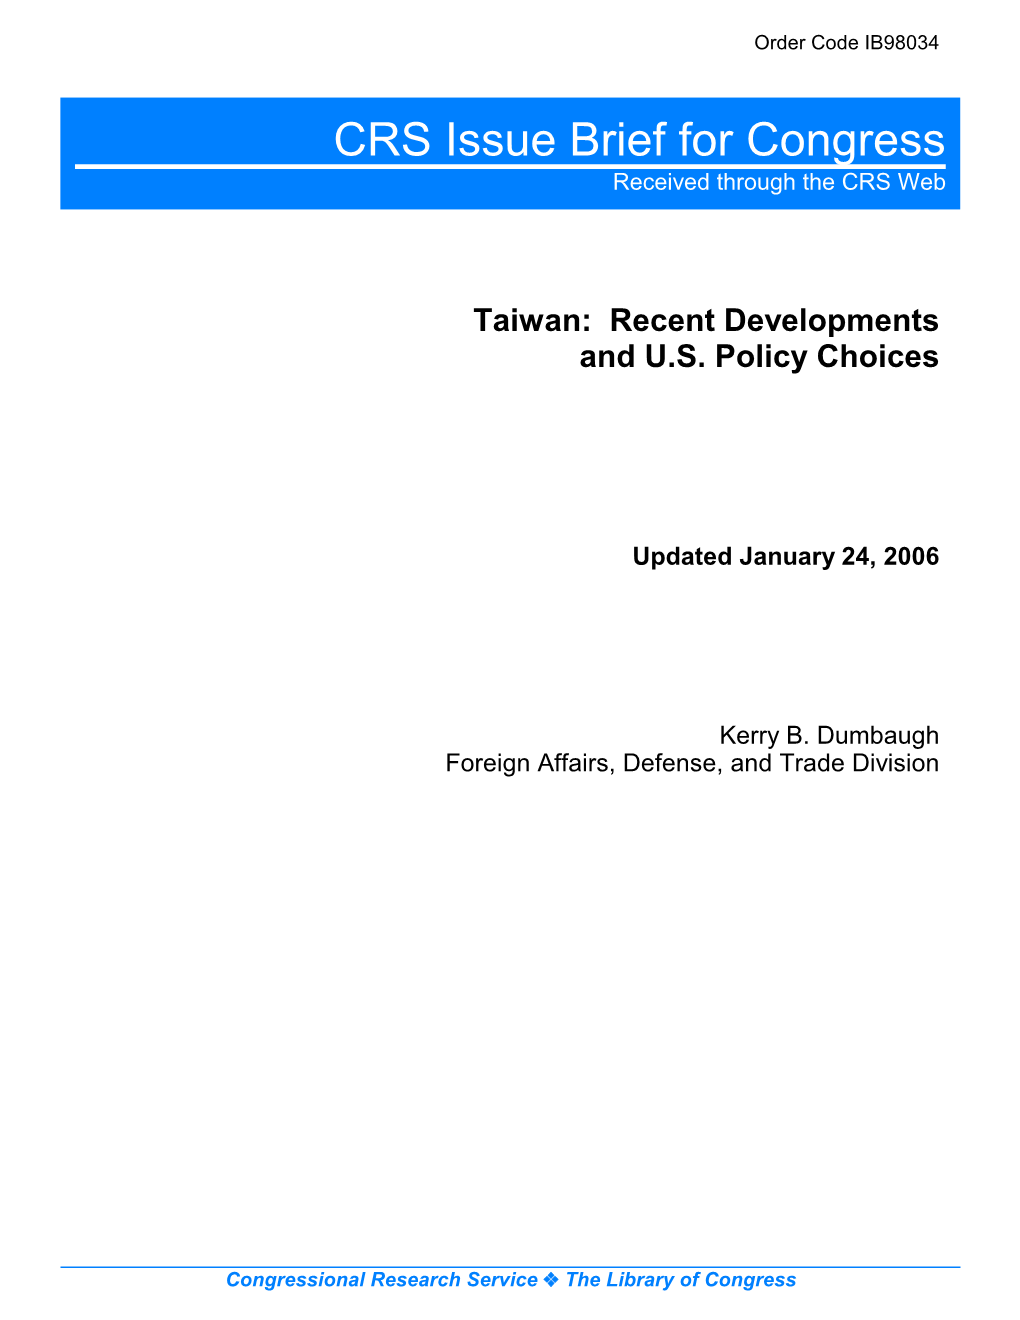 Taiwan: Recent Developments and U.S